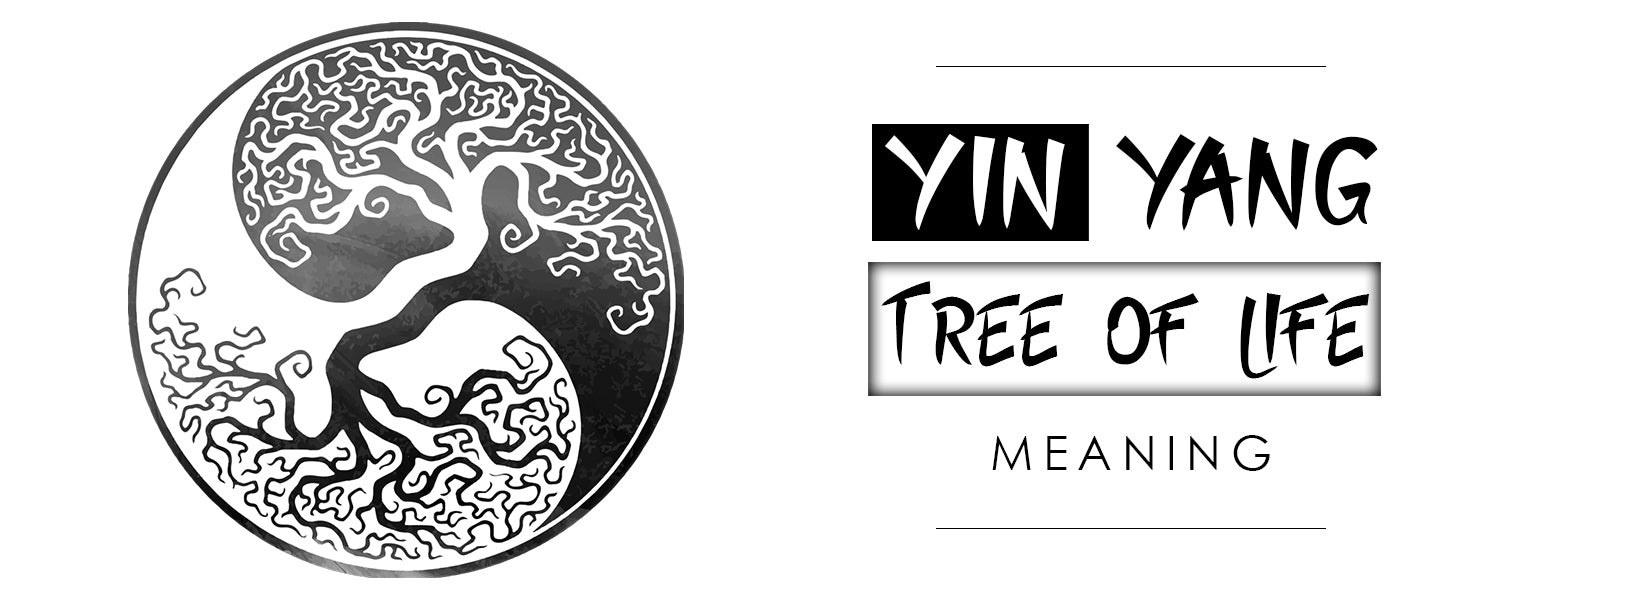 Yin Yang Tree of Life